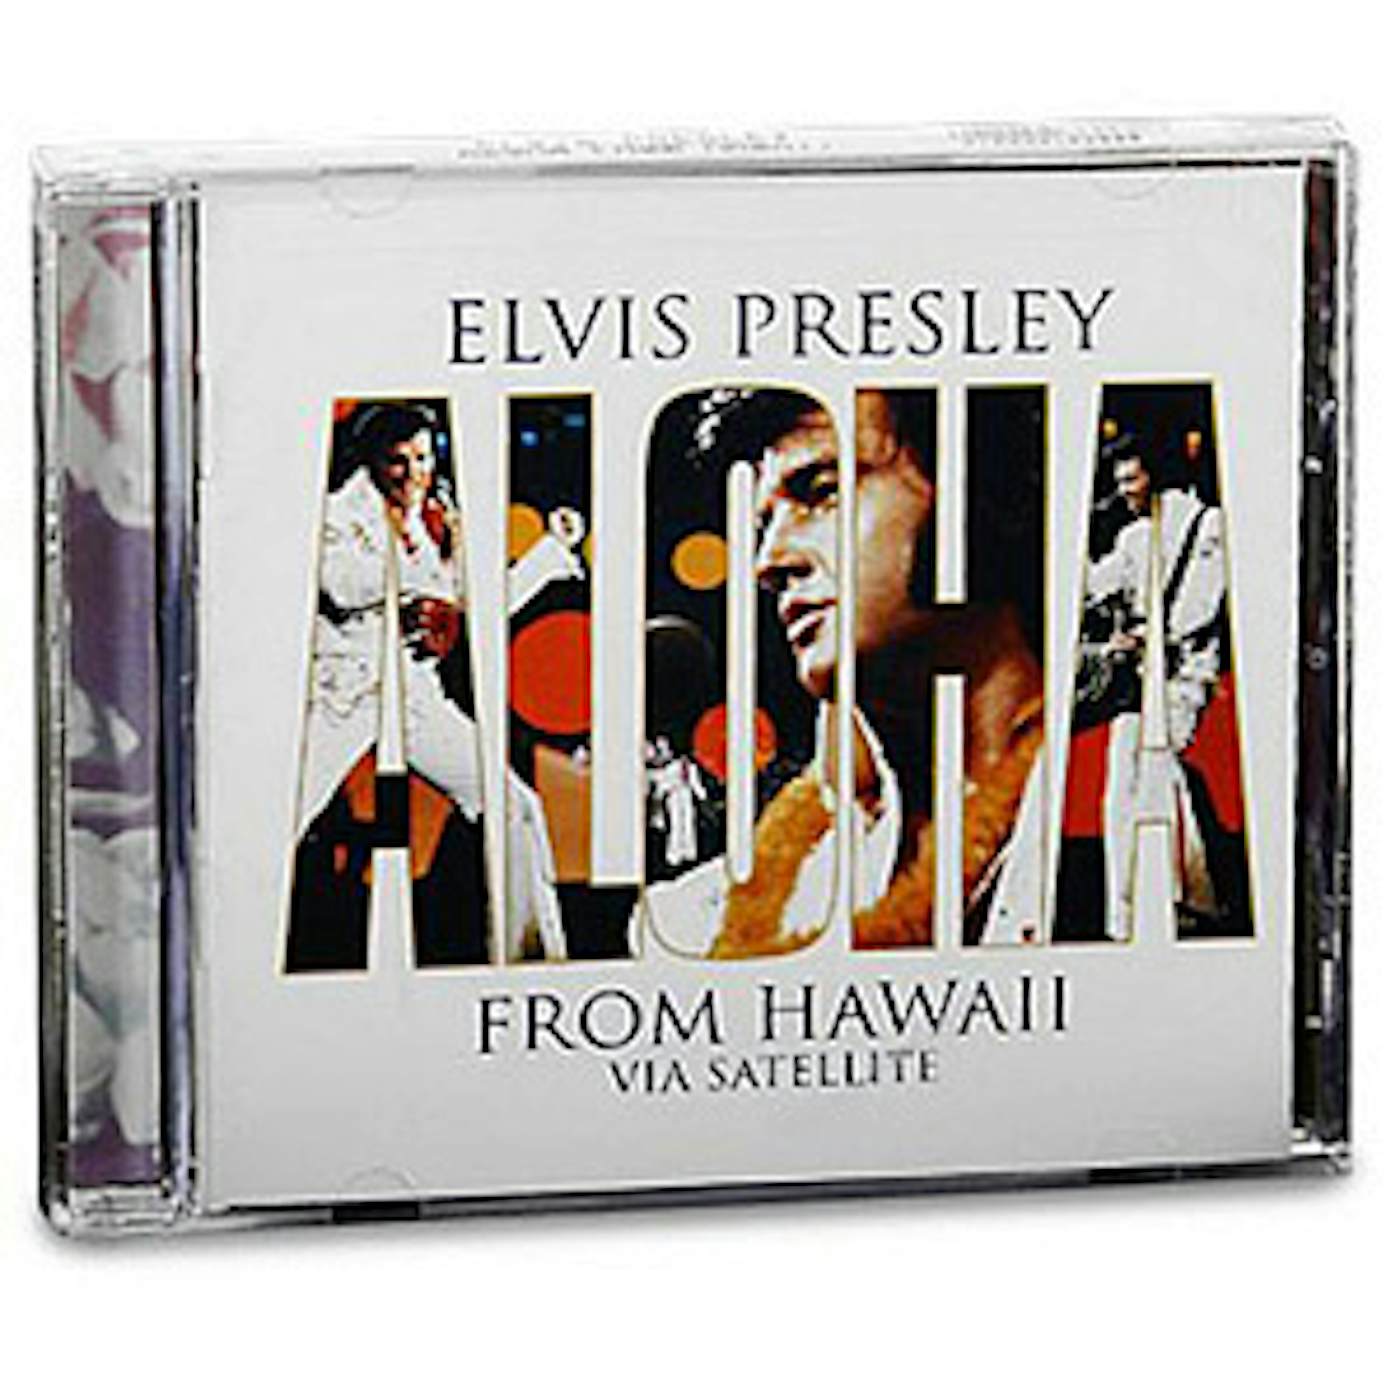 Elvis Presley - Aloha from Hawaii CD